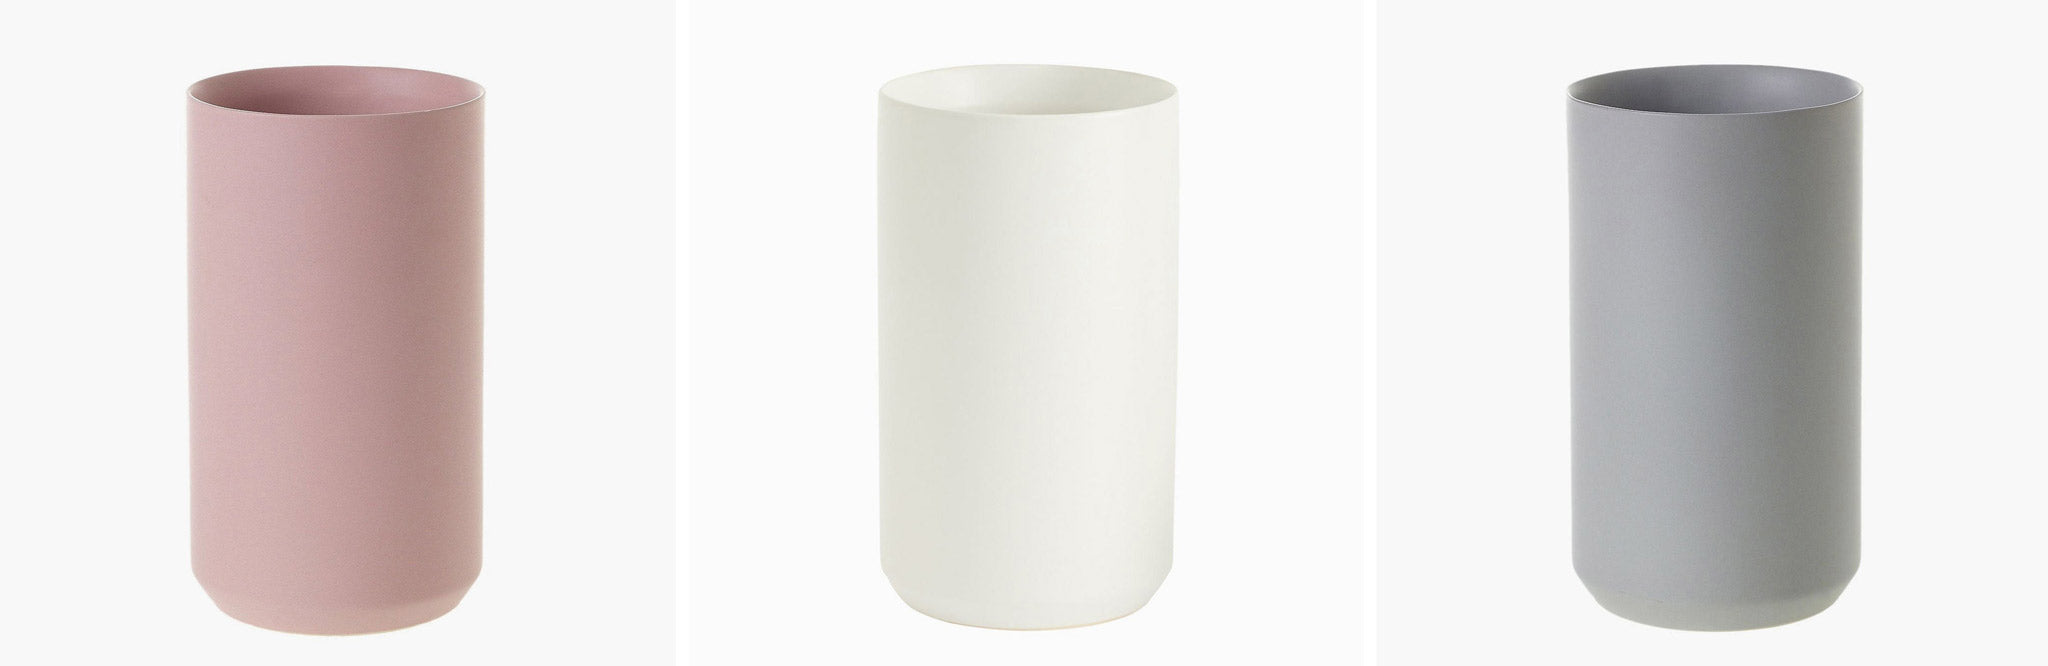 Tall ceramic vases